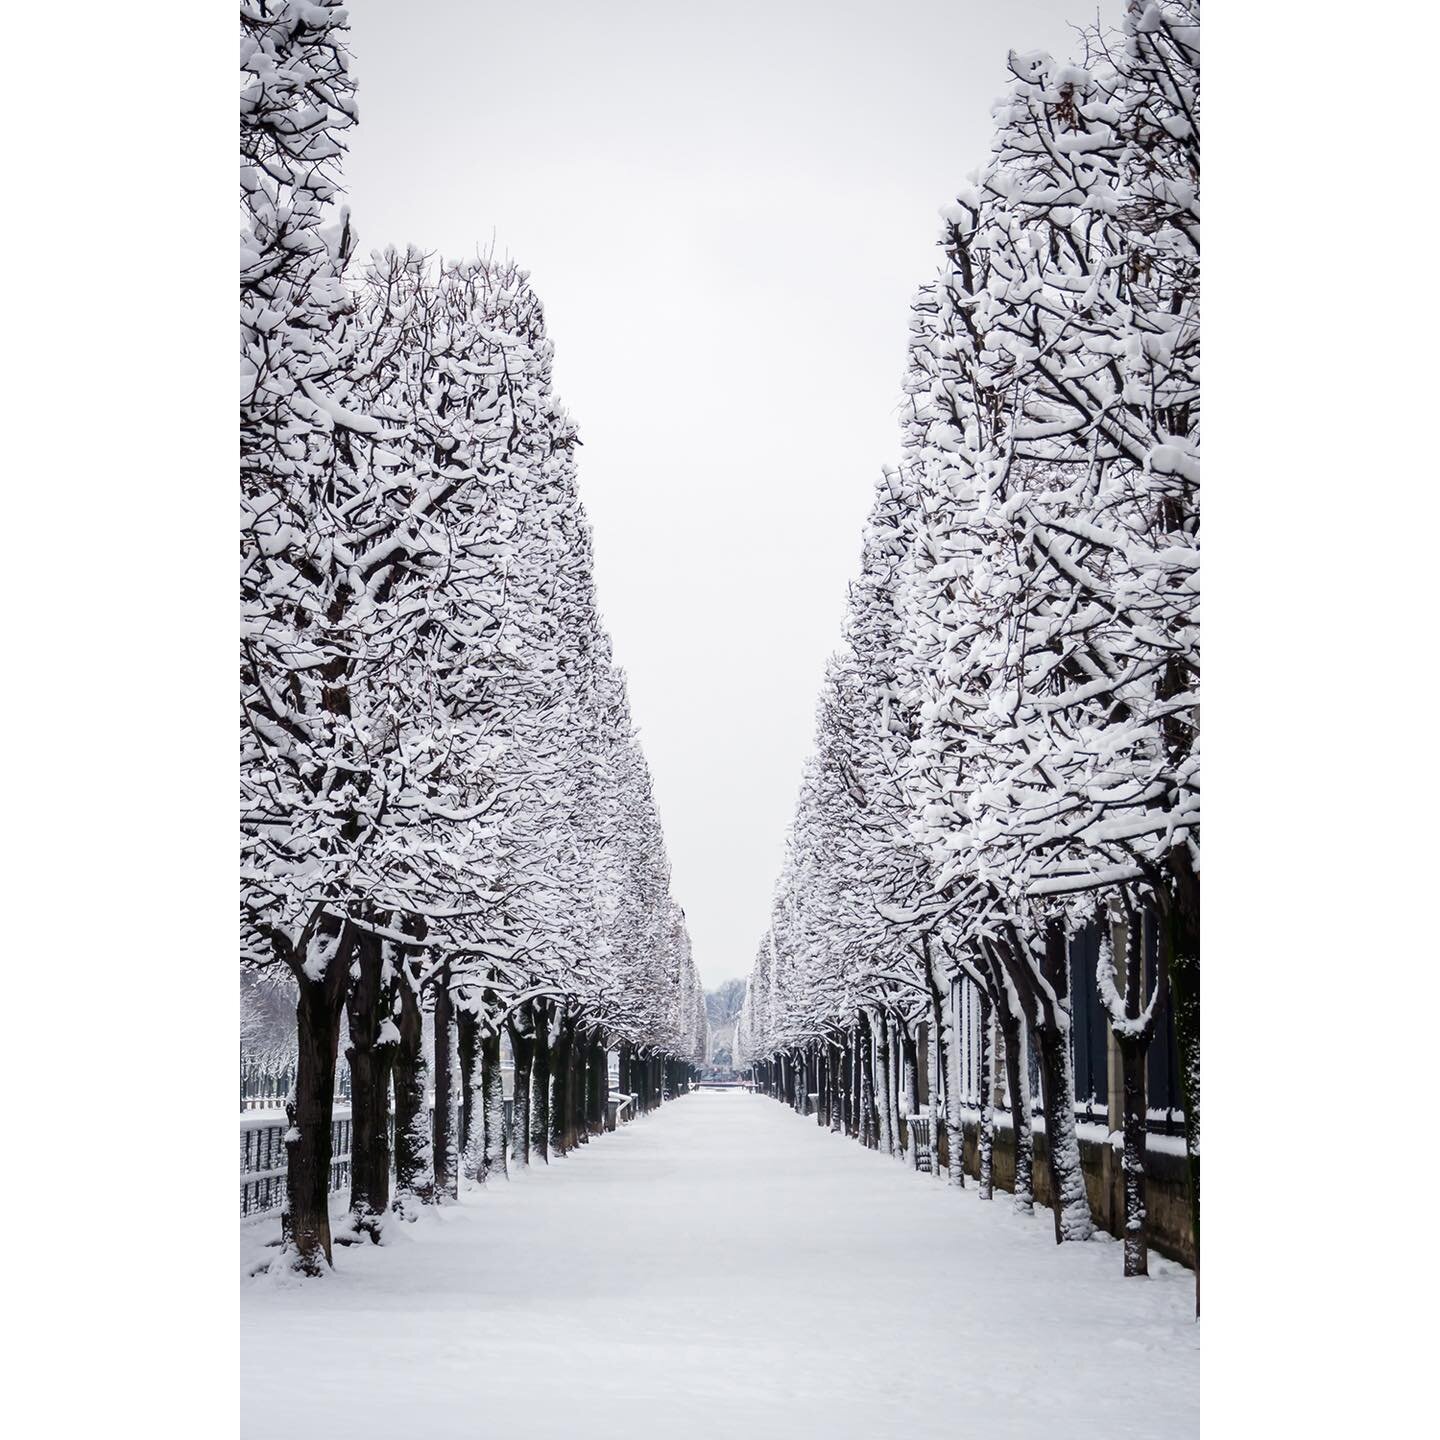 Purity - Paris
.
.
#Paris #JardindesTuileries #snowphotography #JardindesTuileriesParis #Parisphotography #Paris_focus_on #Pariscityvision #streetphotography #Parislandscape #ig_Paris #igersParis #picoftheday #photooftheday #Paris_maville #Parisjetai